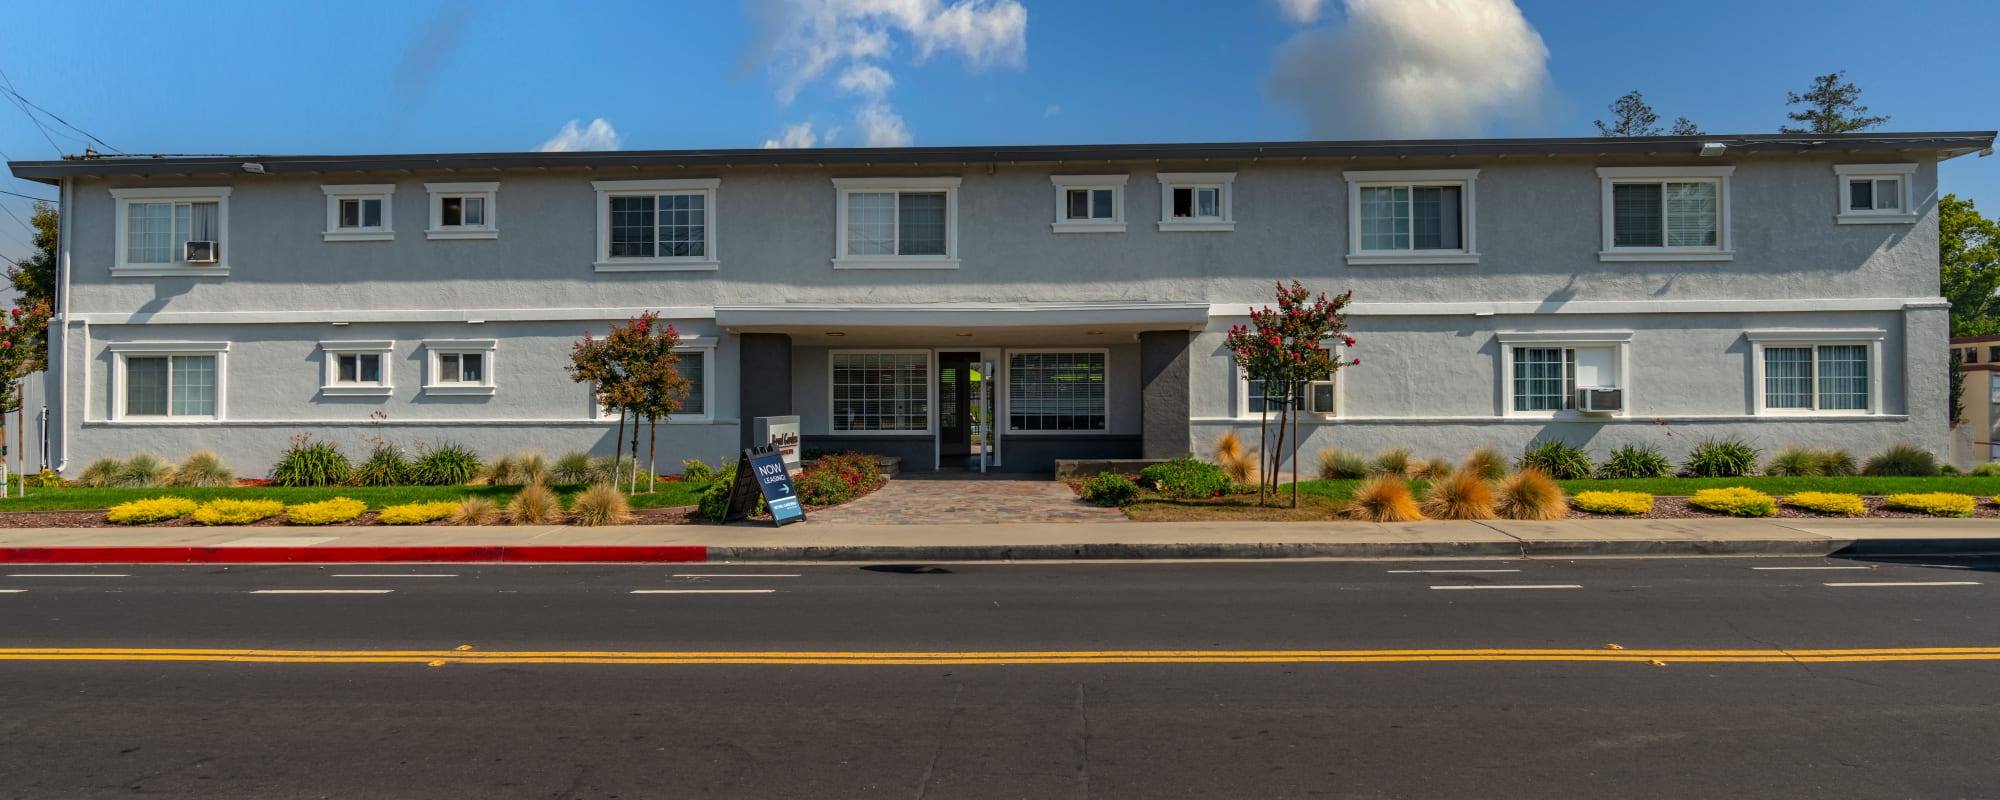 Neighborhood | Royal Gardens Apartments in Livermore, California